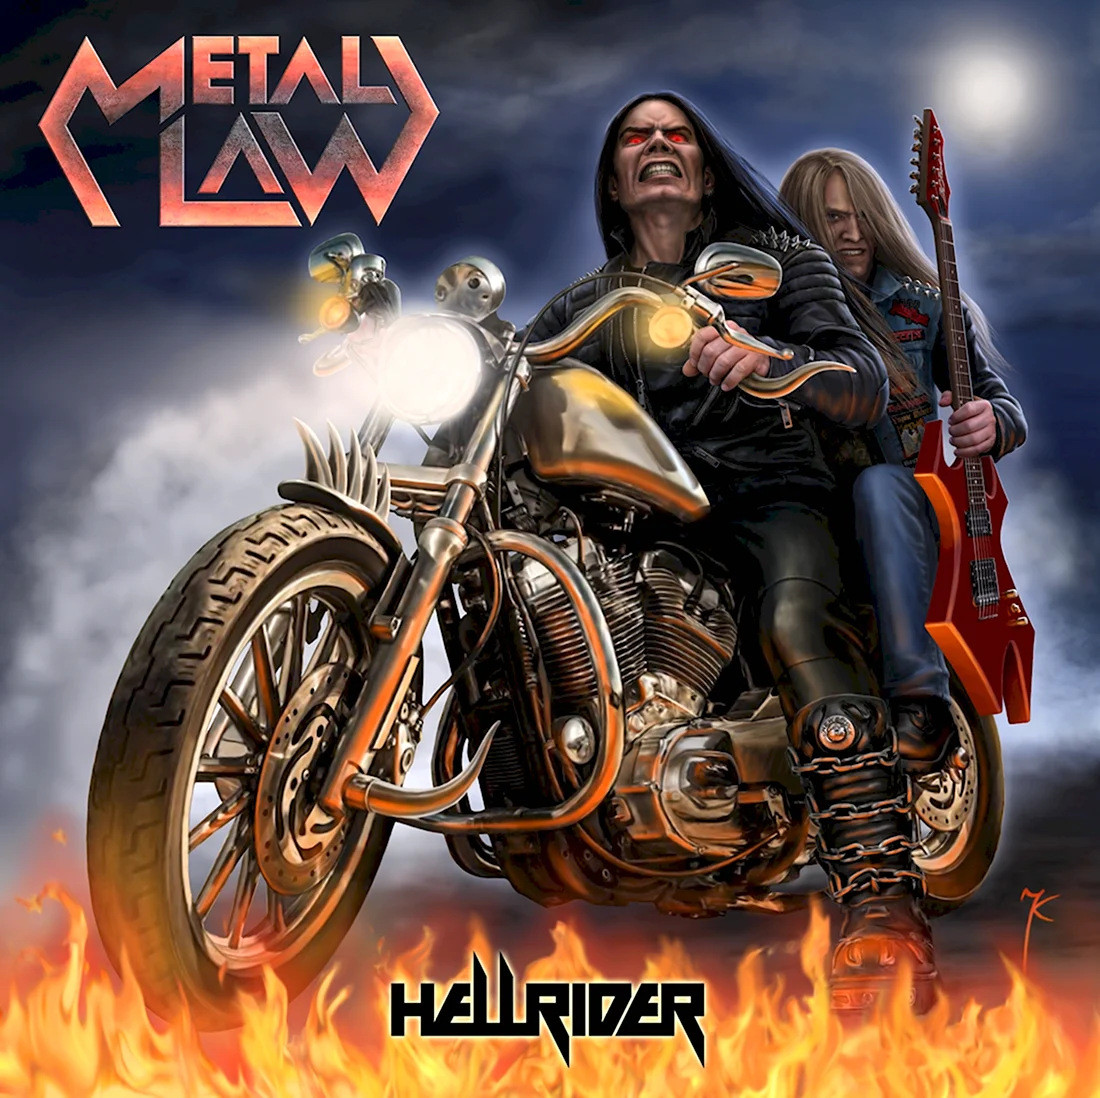 Metal Law Hellrider 2016